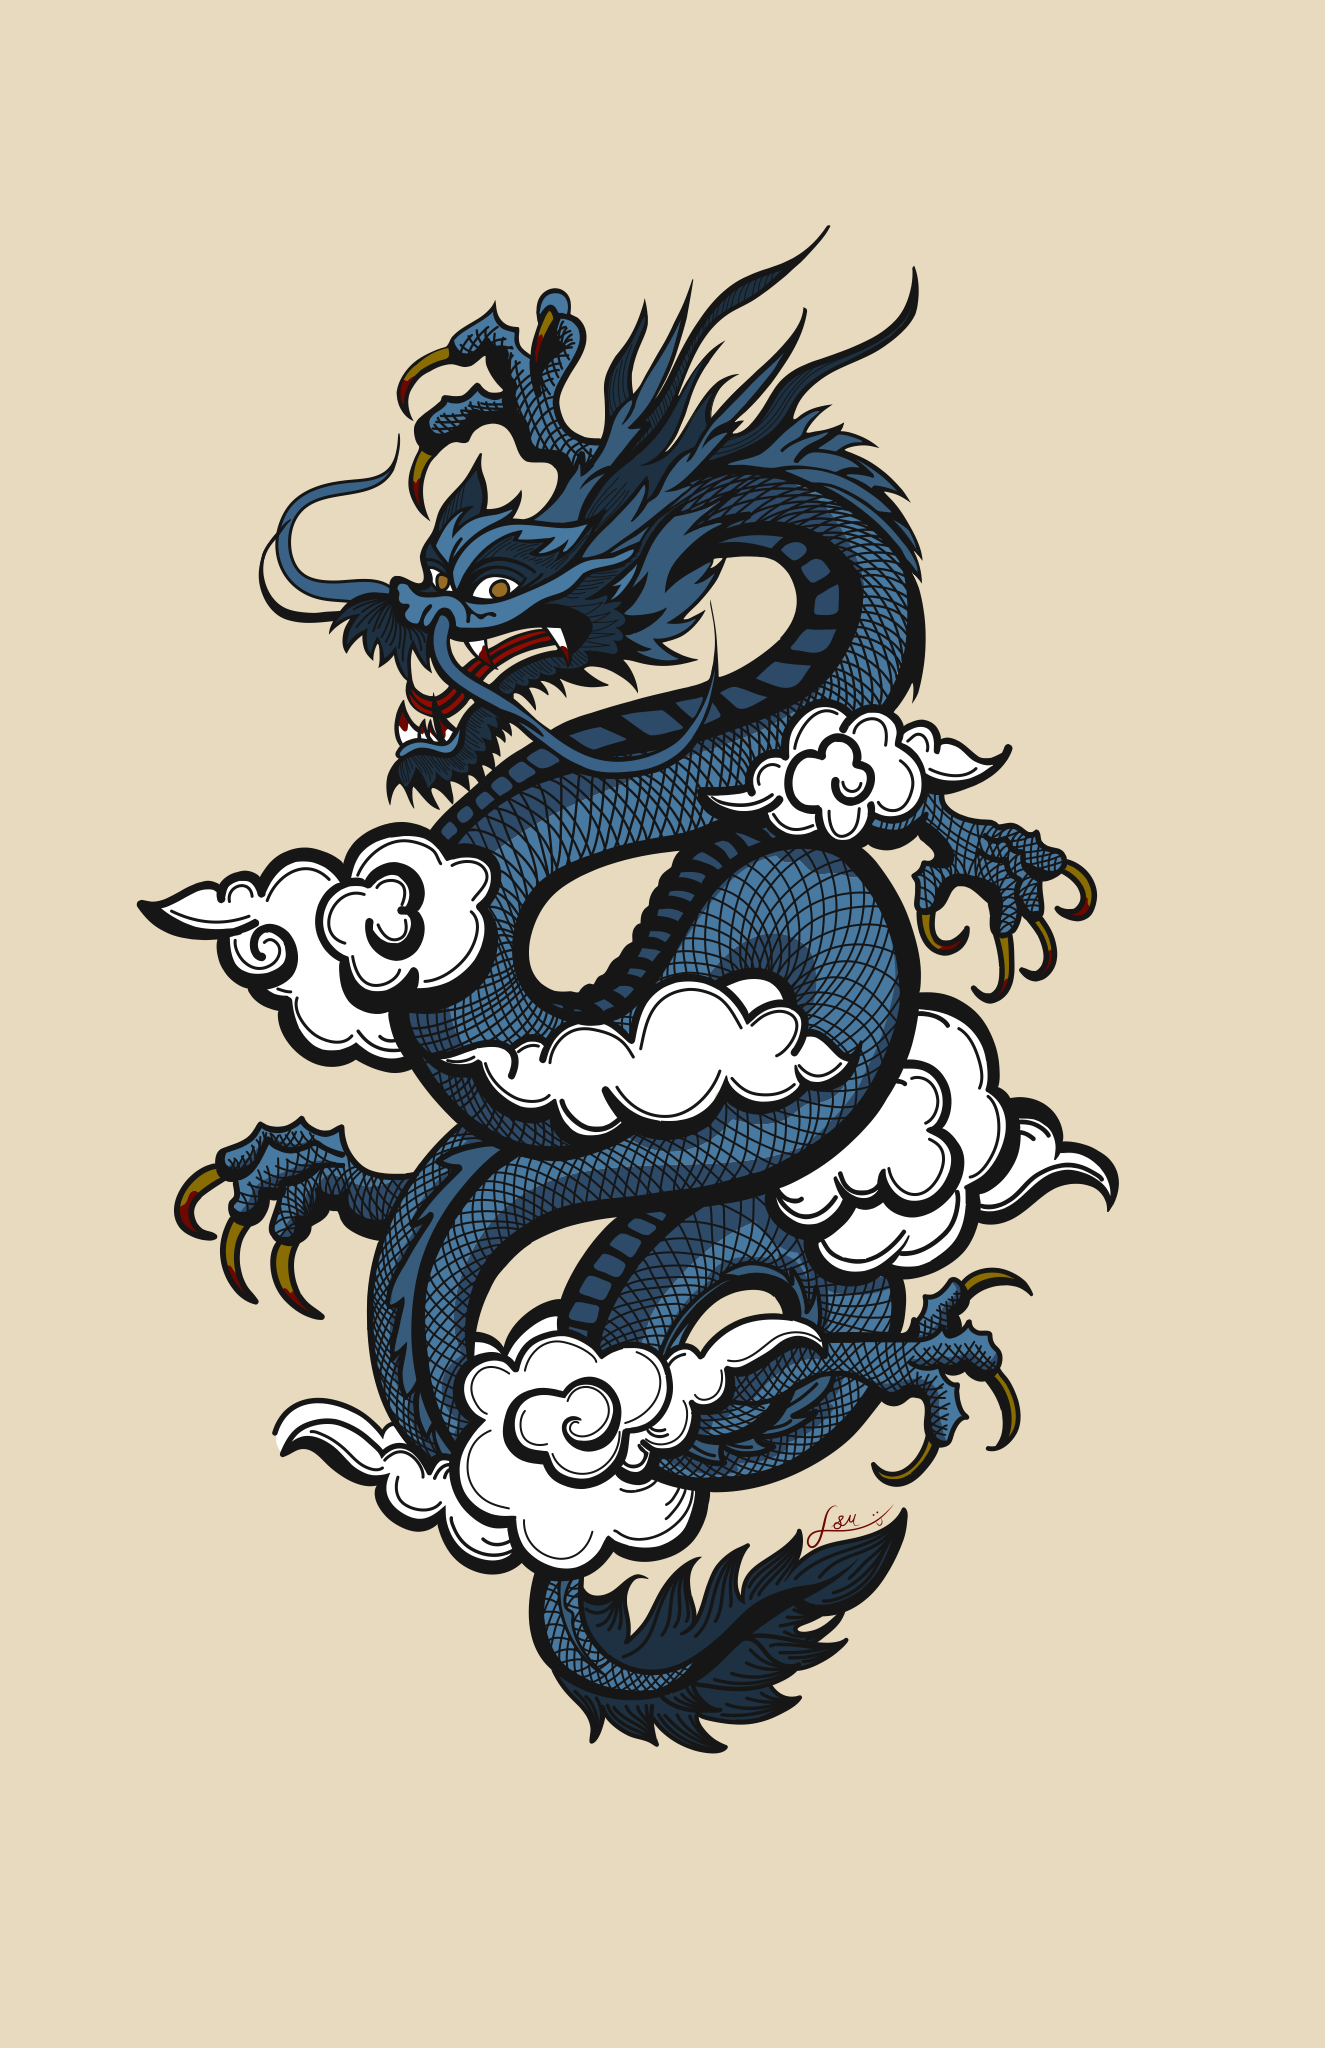 jae7th_ for more. Dragon tattoo wallpaper, Dragon wallpaper, Blue dragon tattoo